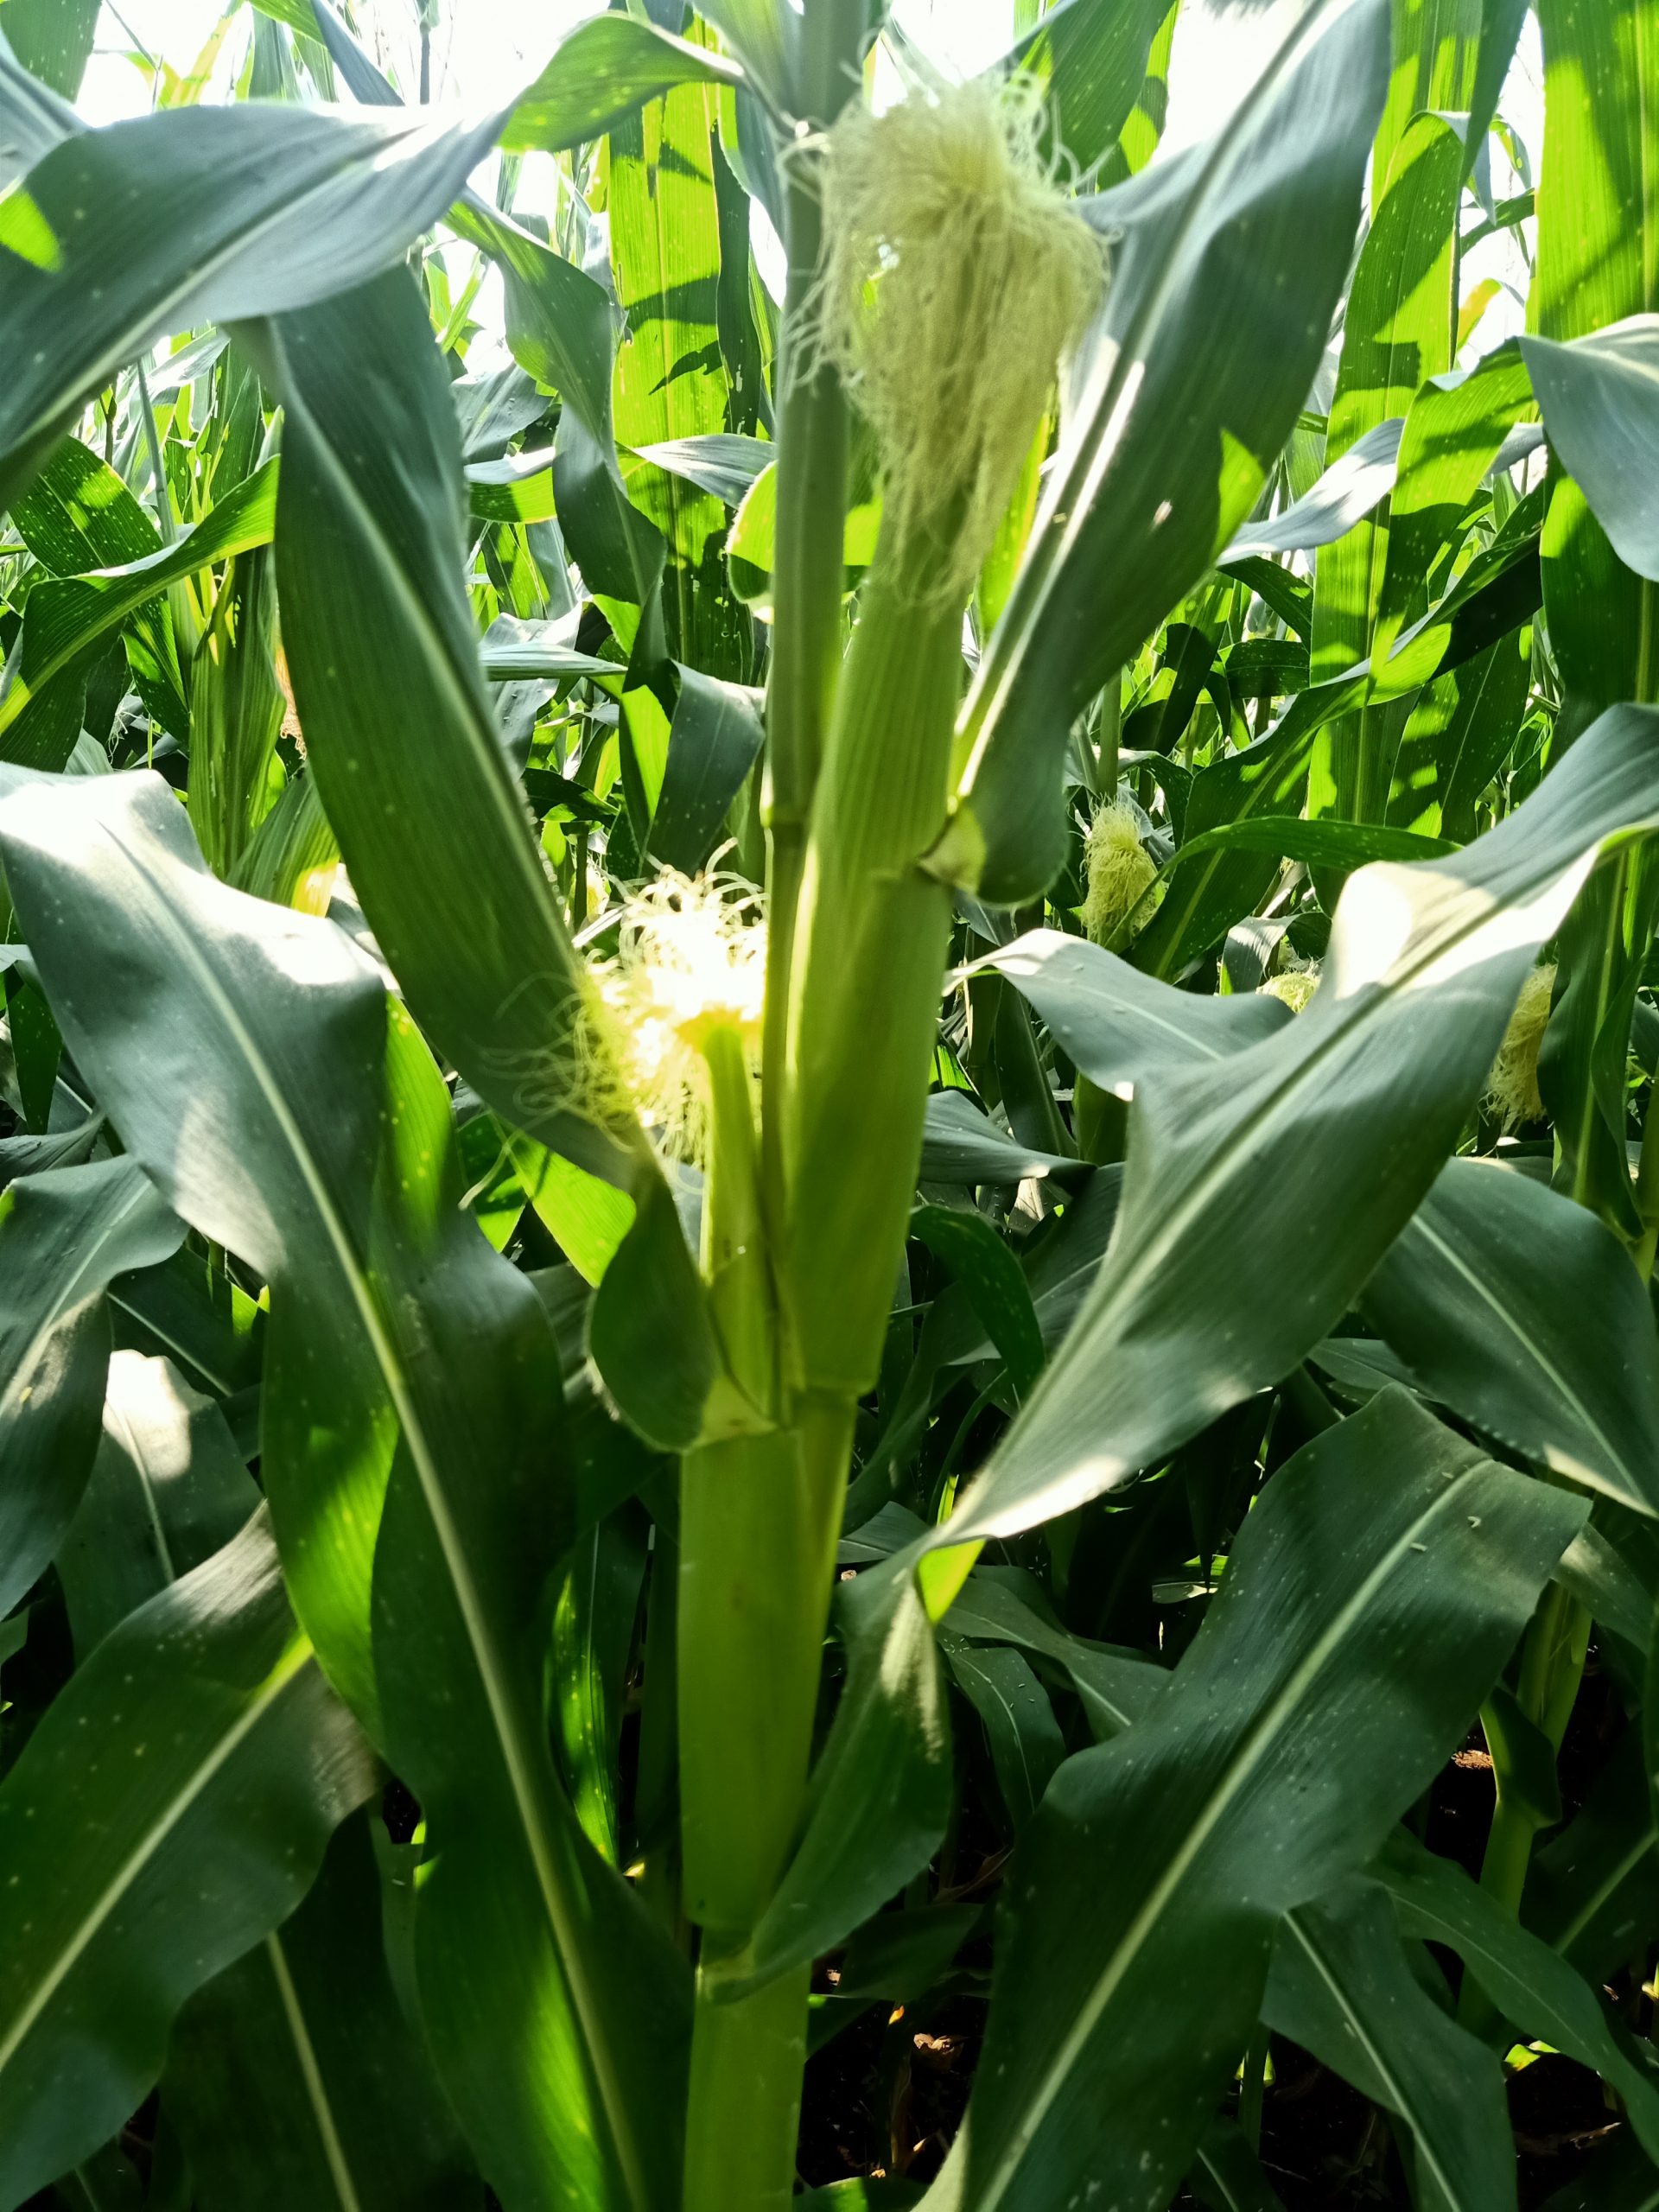 Maize silks on plant